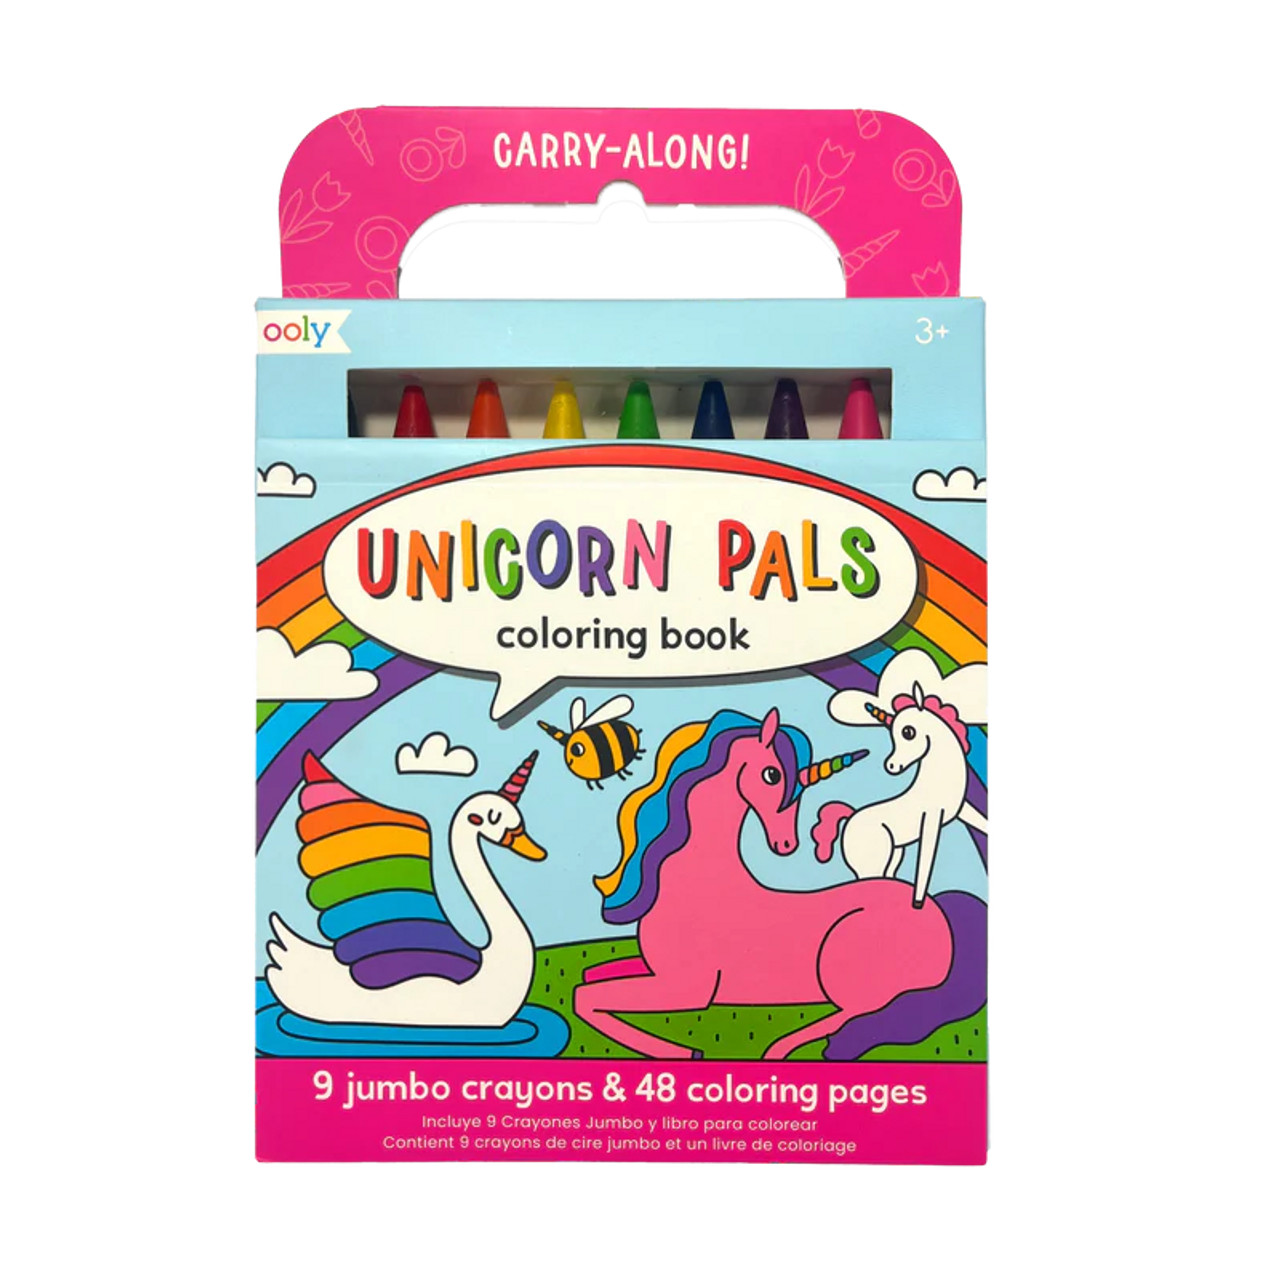 Carry Along Crayons & Coloring Book Kit - Unicorn